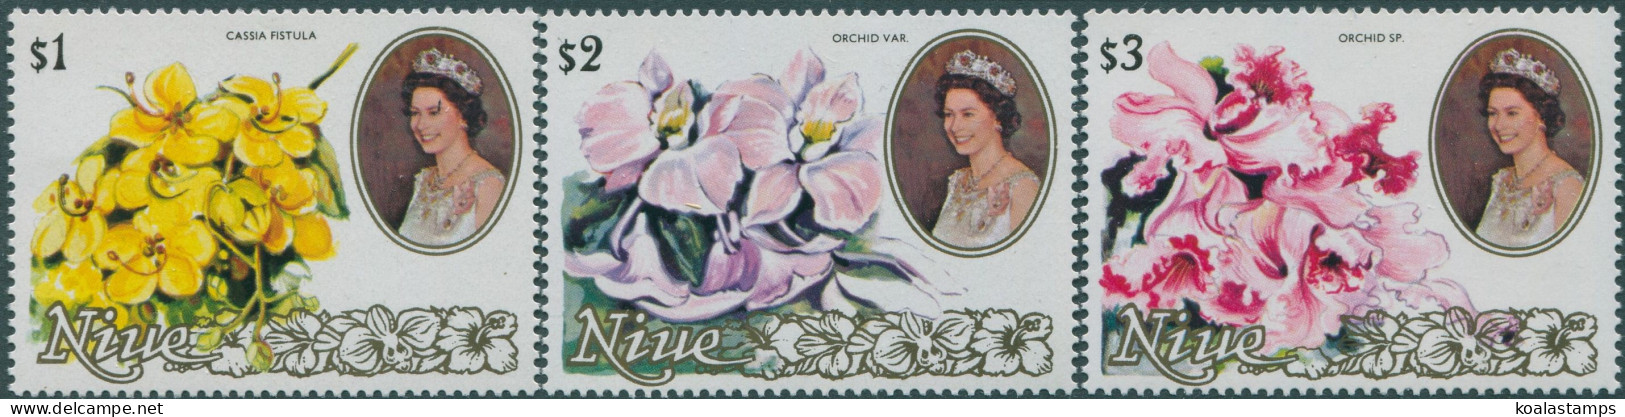 Niue 1981 SG405-407 Flowers QEII MNH - Niue